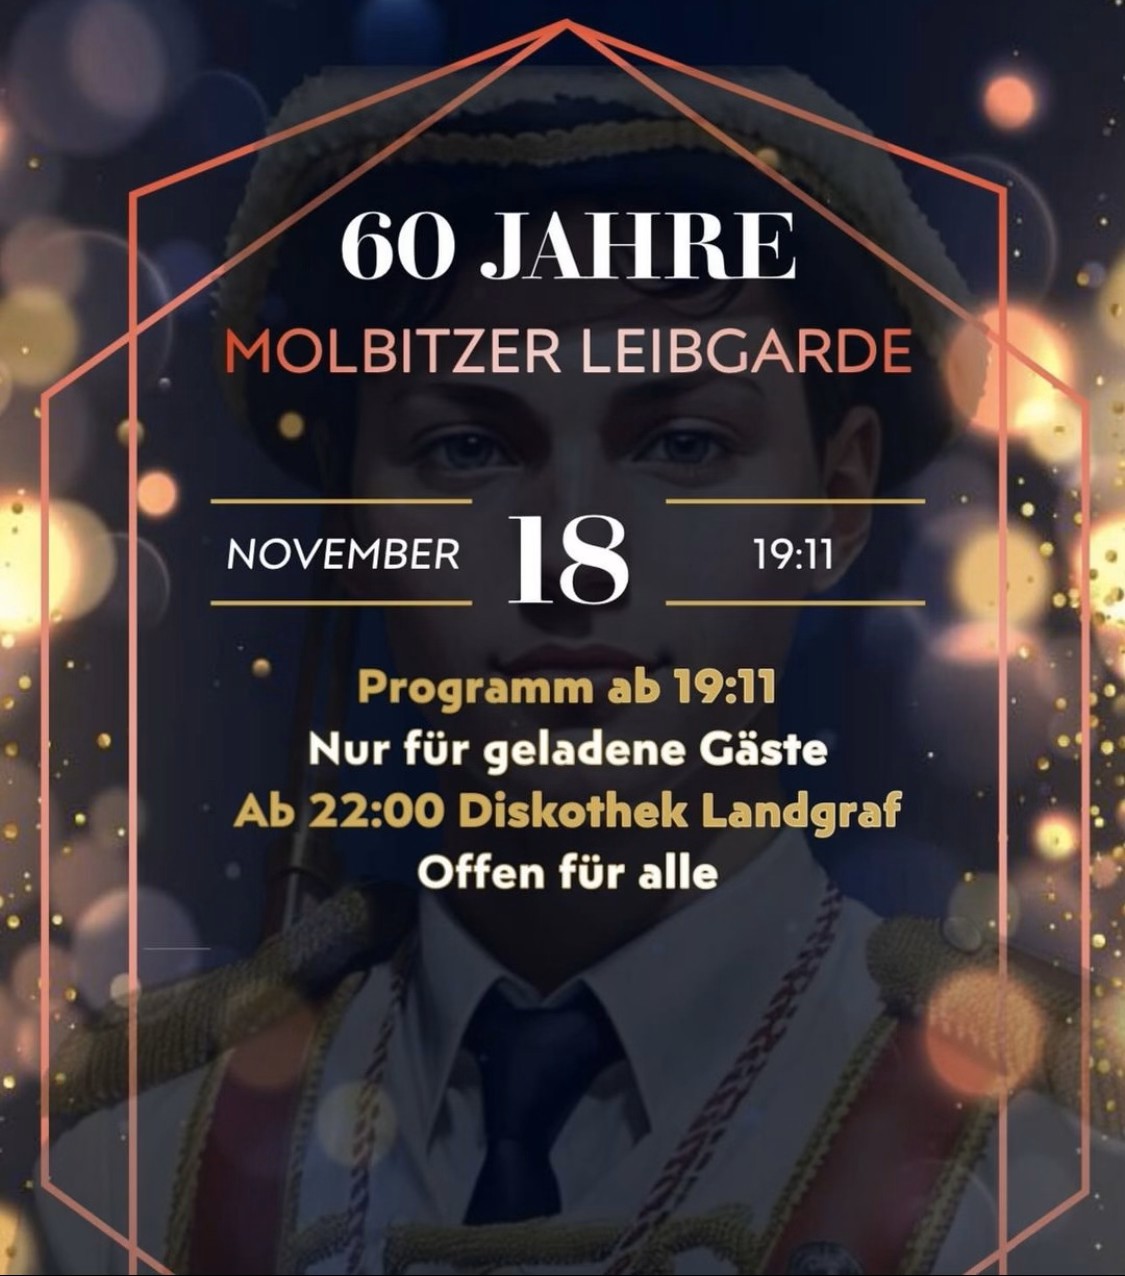 60 Jahre Leibgarde Molbitz